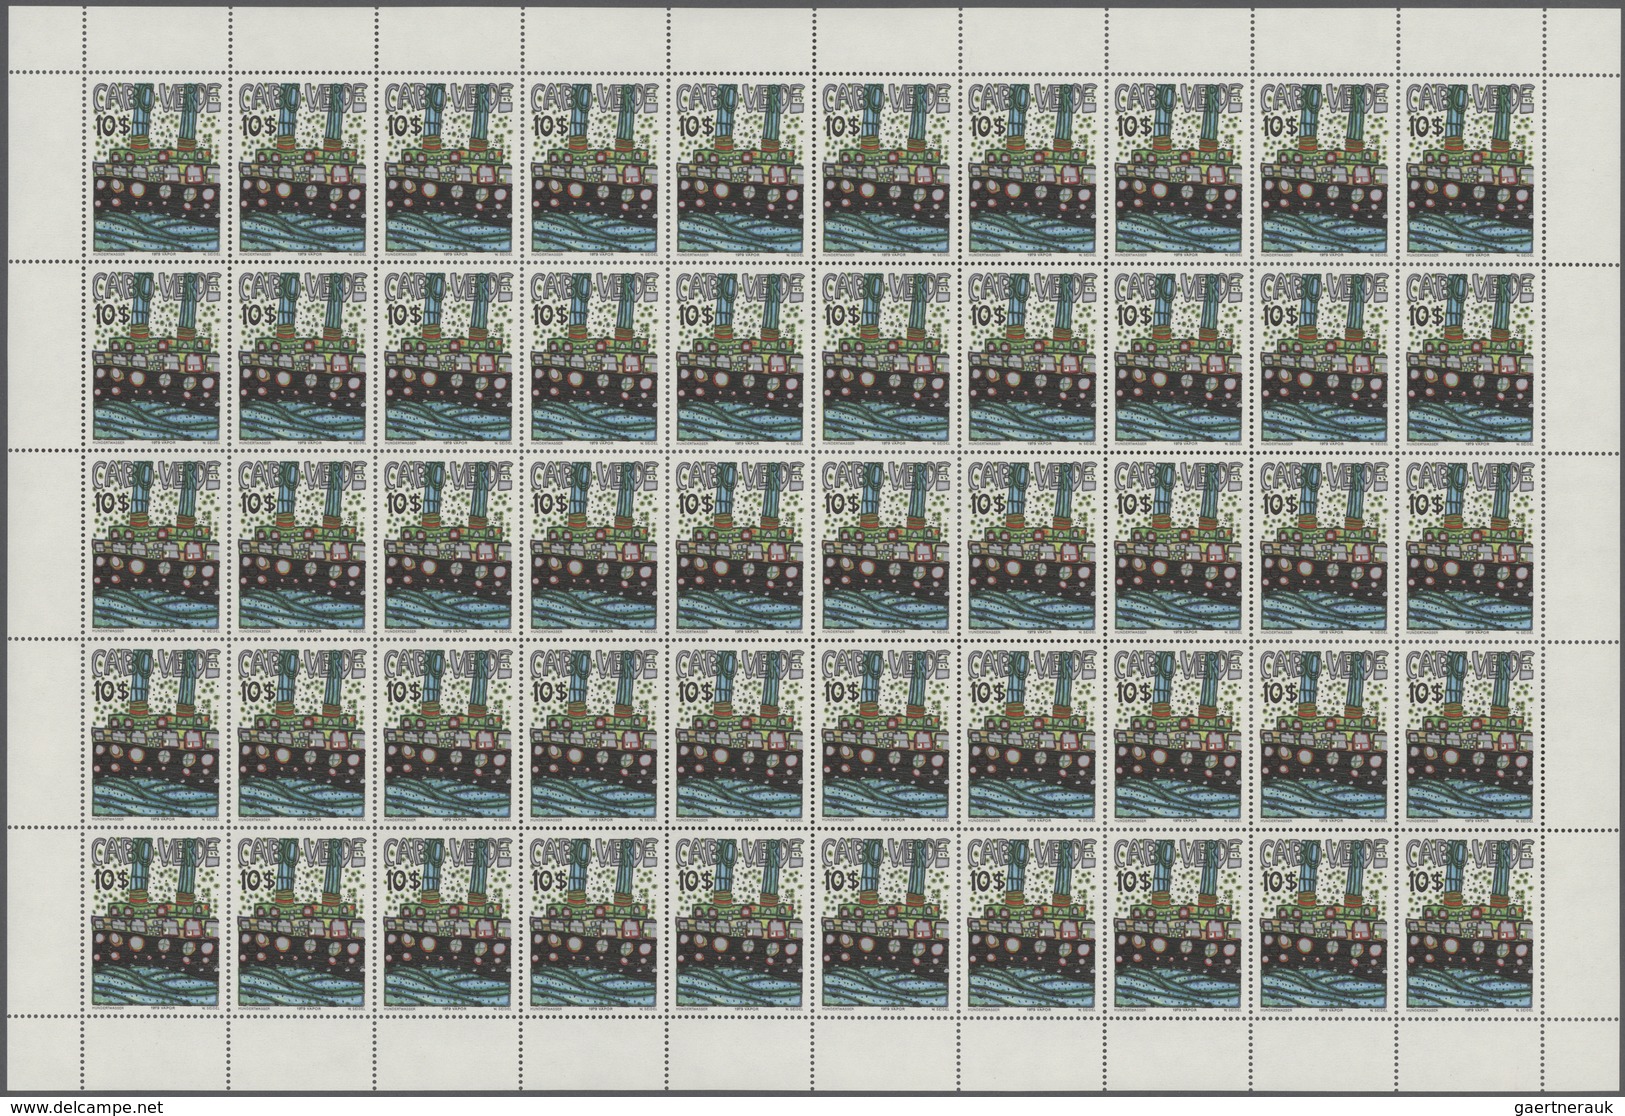 Kap Verde: 1982, Hundertwasser, Not Issued $10, Complete (unfolded) Sheet Of 50 Stamps, Mint Never H - Cape Verde